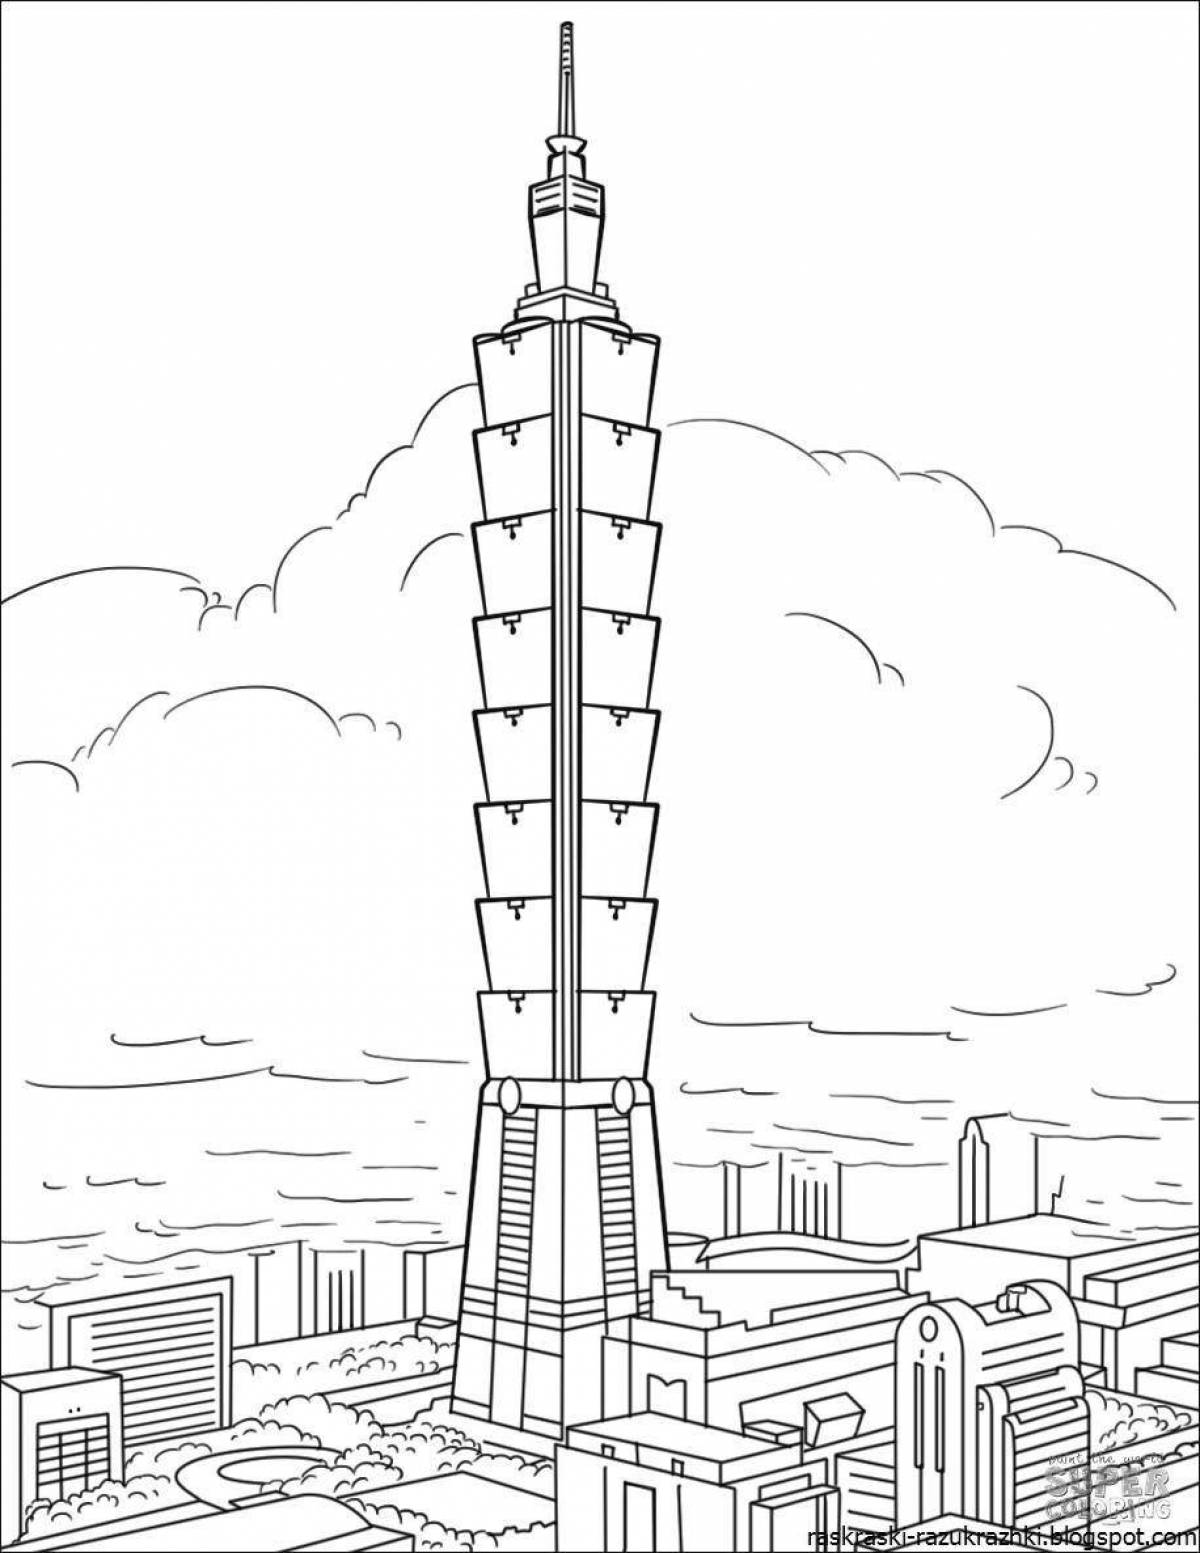 Perfect skyscraper coloring book for kids